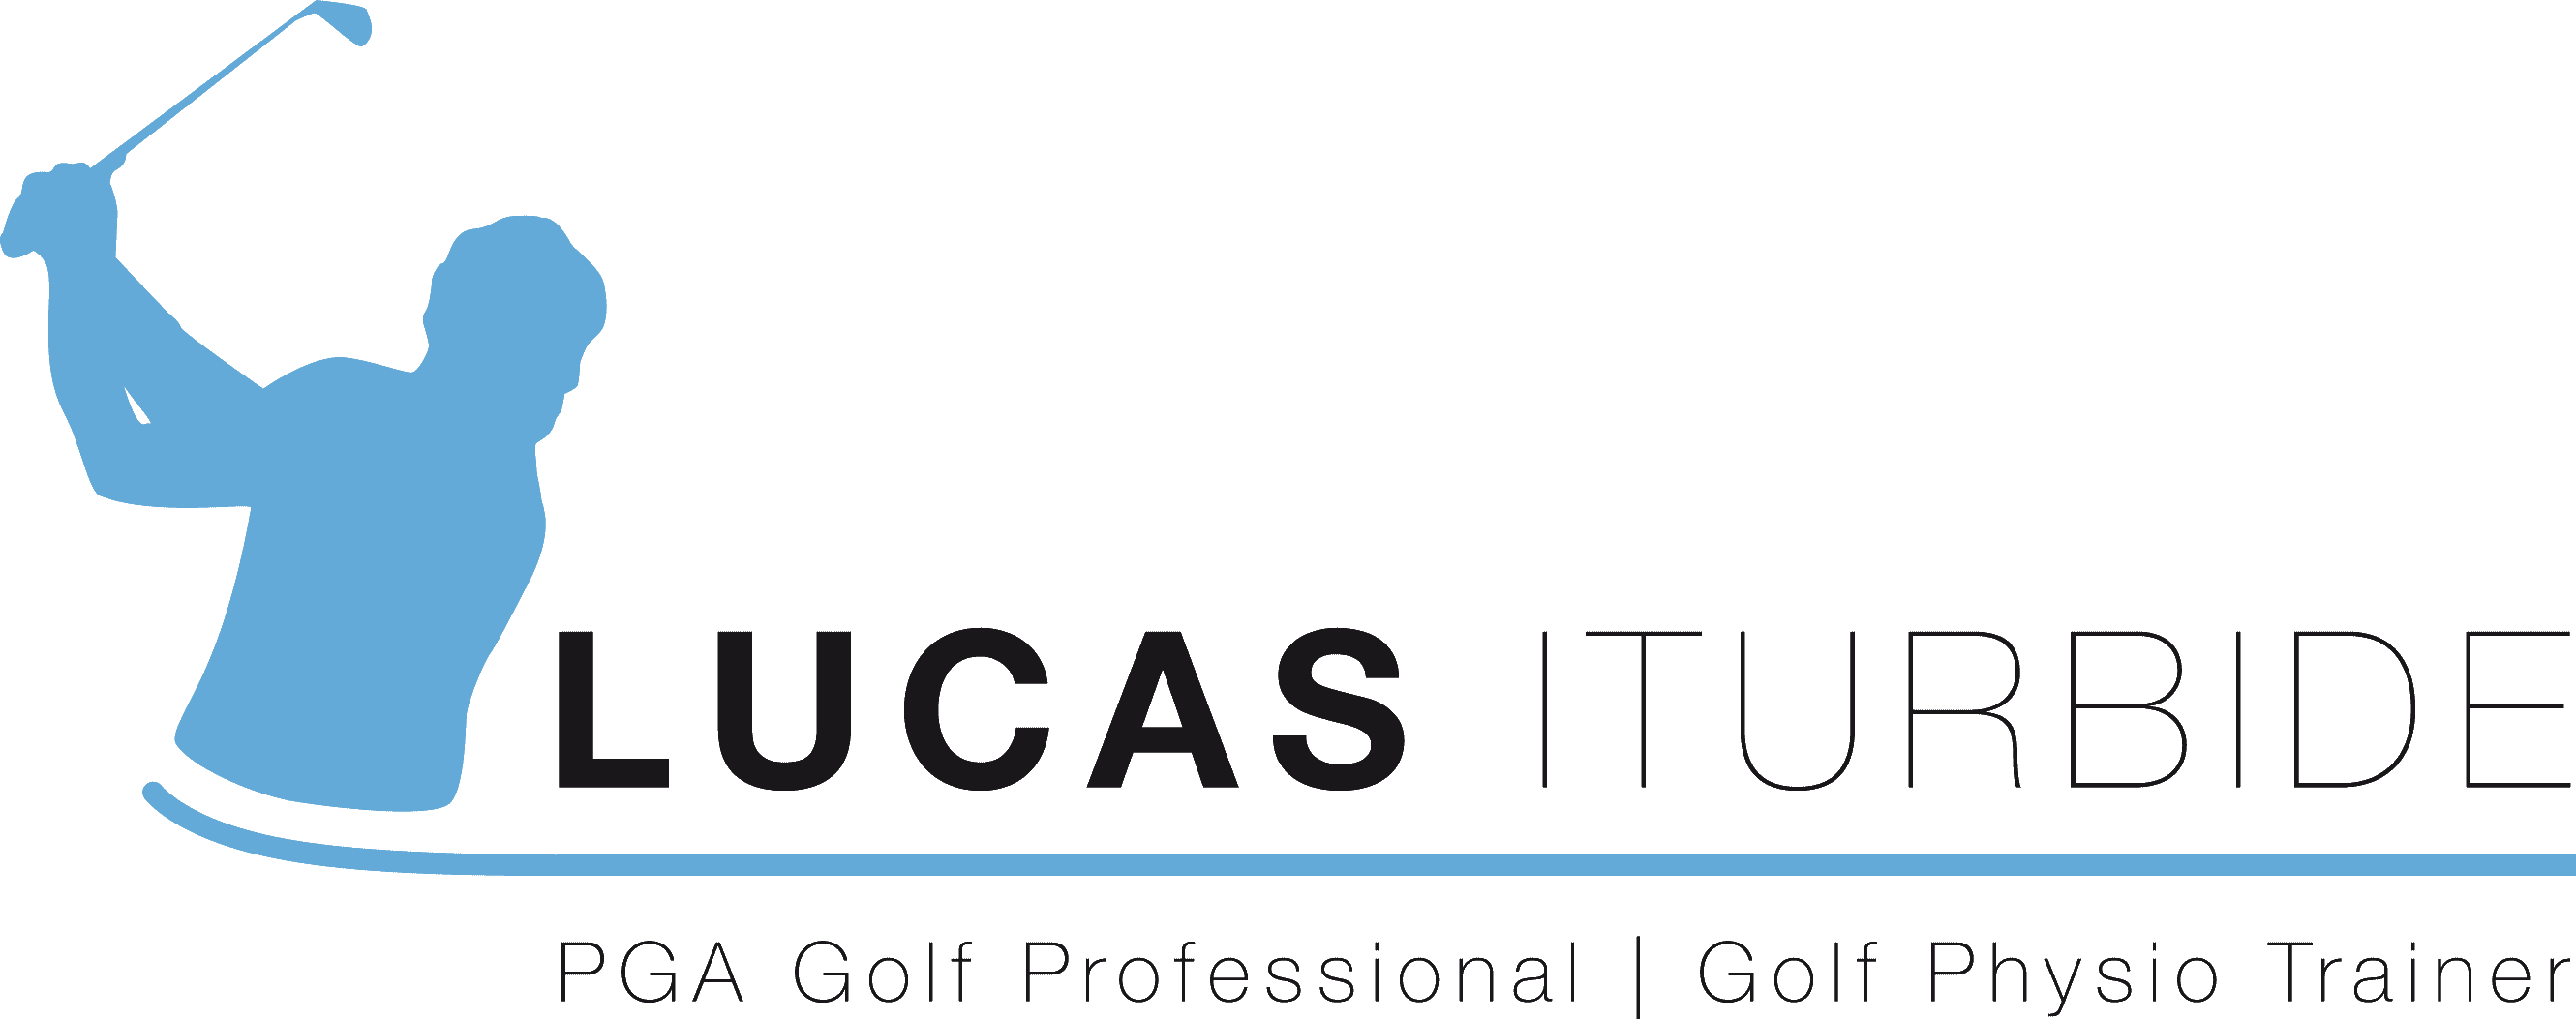 Golftraining Düsseldorf Lucas Iturbide